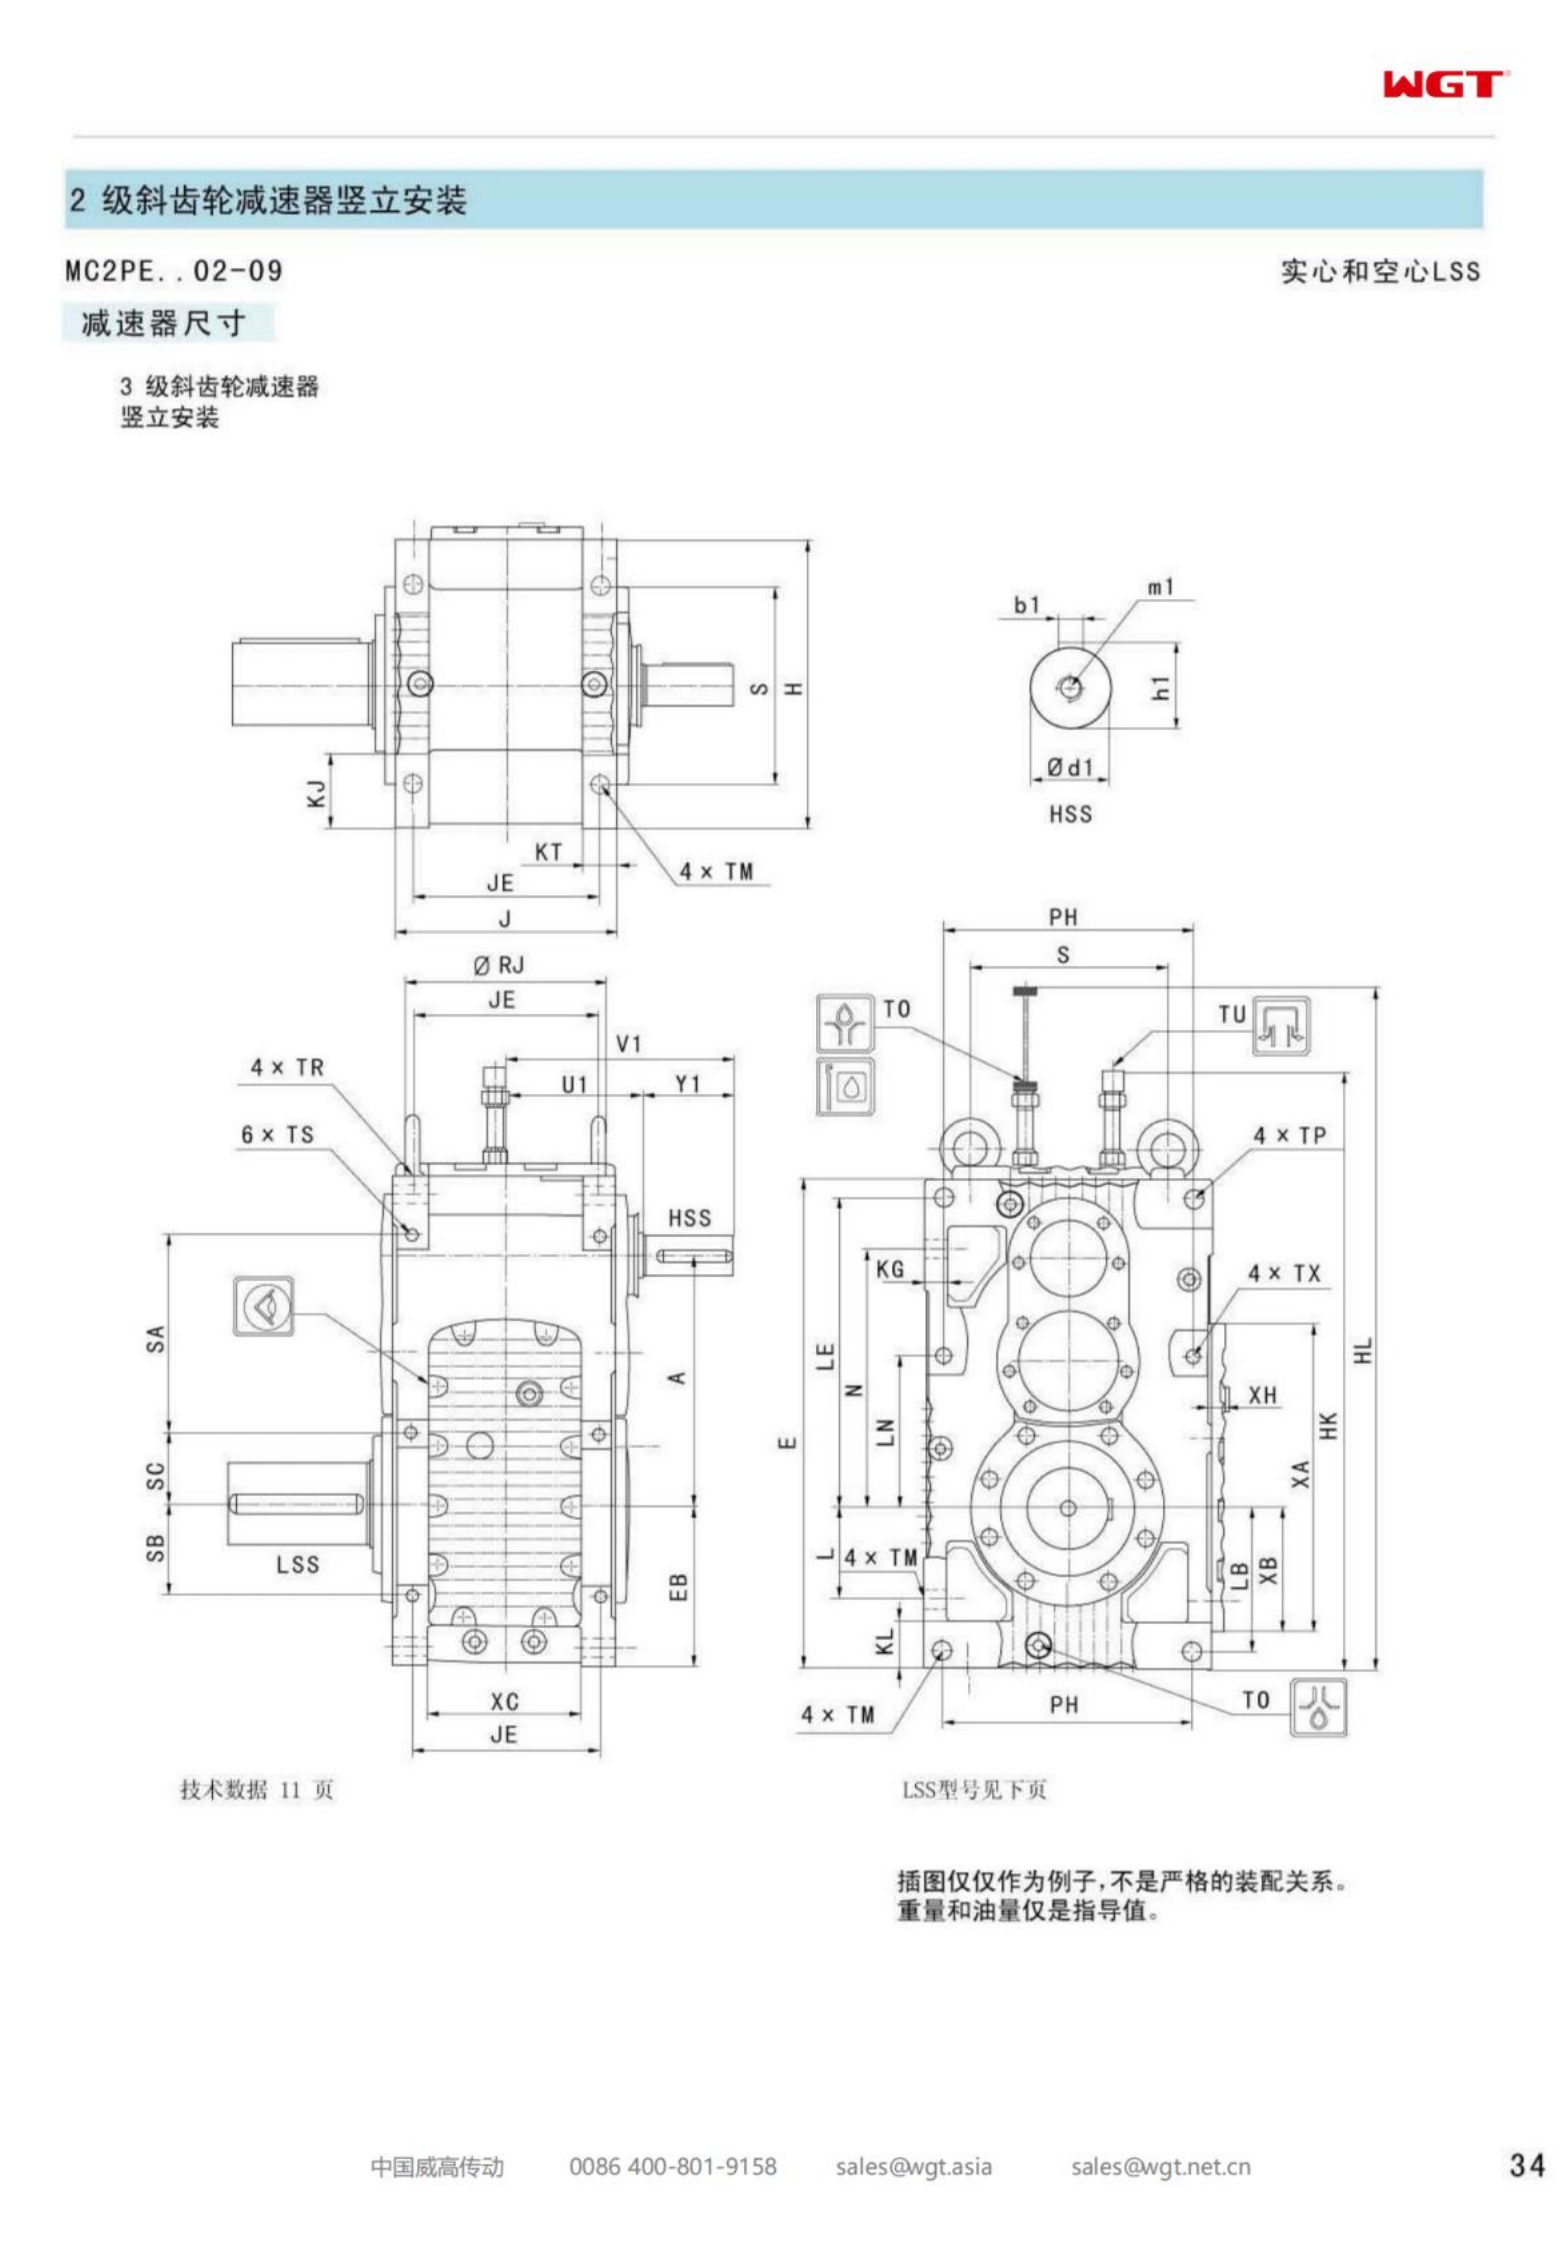 MC2PESF04 replaces _SEW_MC_Series gearbox (patent)